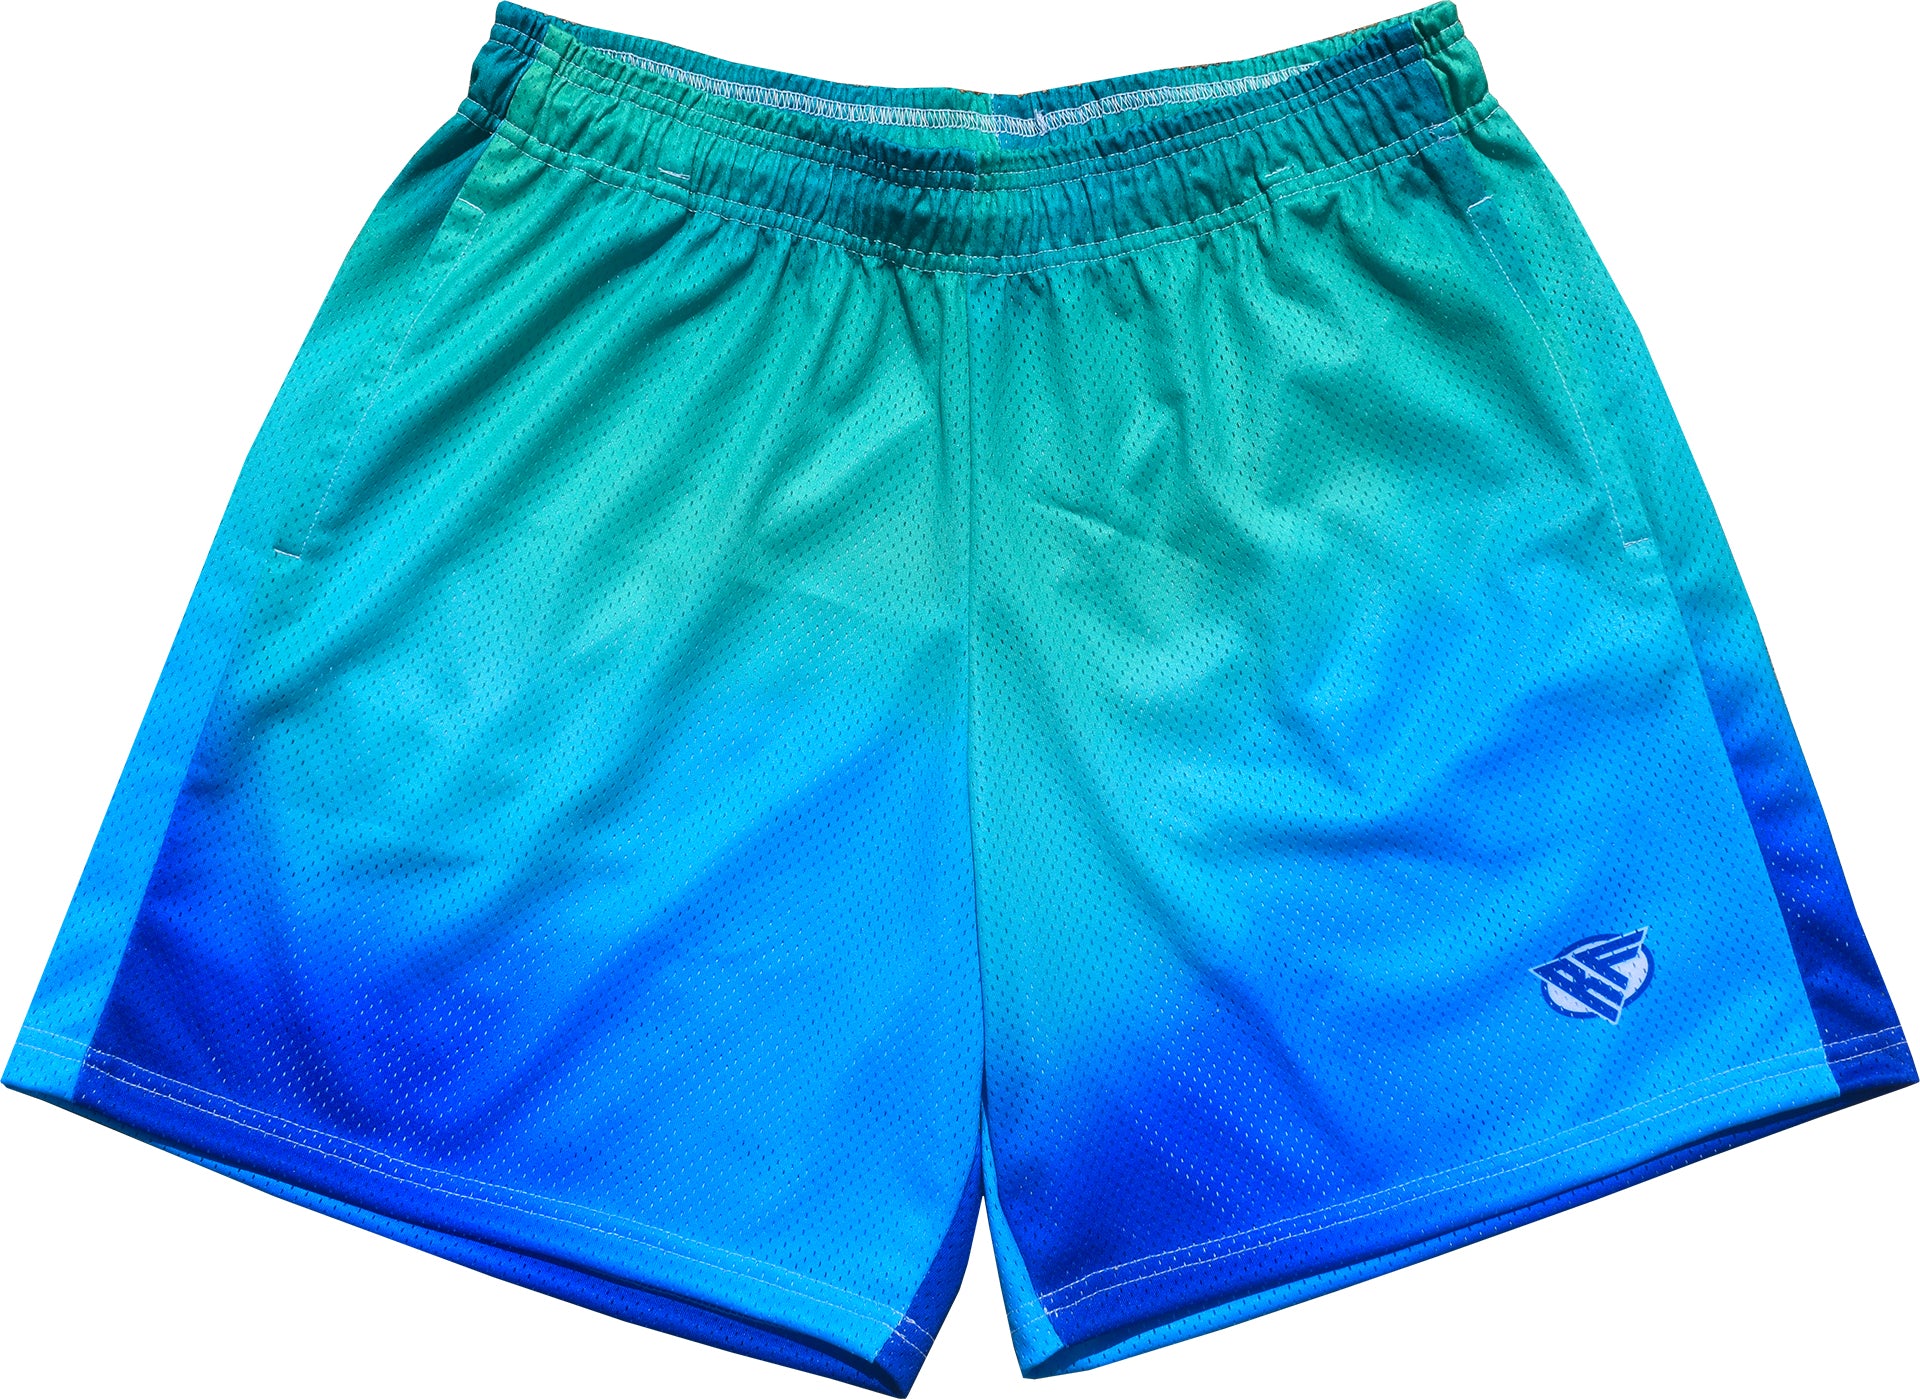 RF Mesh Gradient Shorts - Blue/Teal